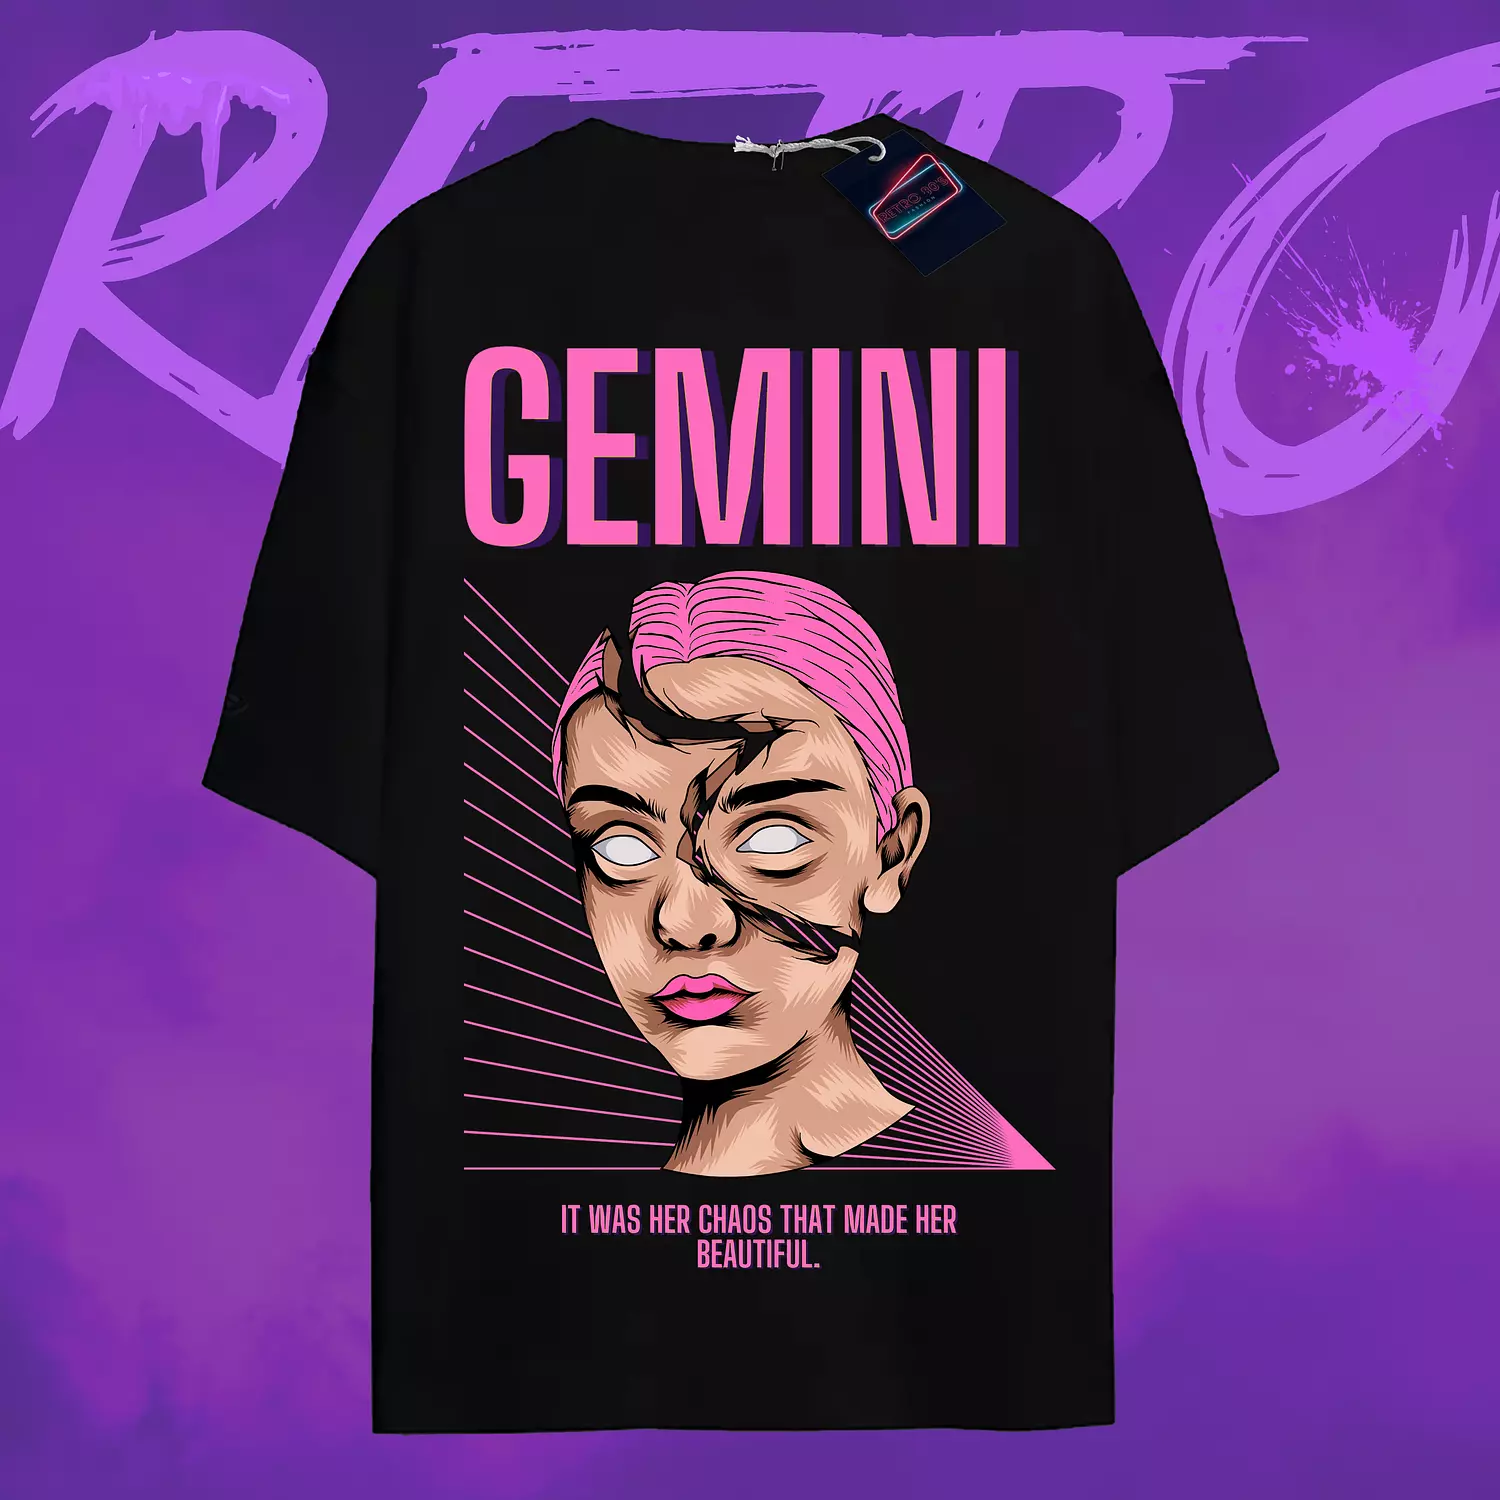 Gemini T-shirt  hover image